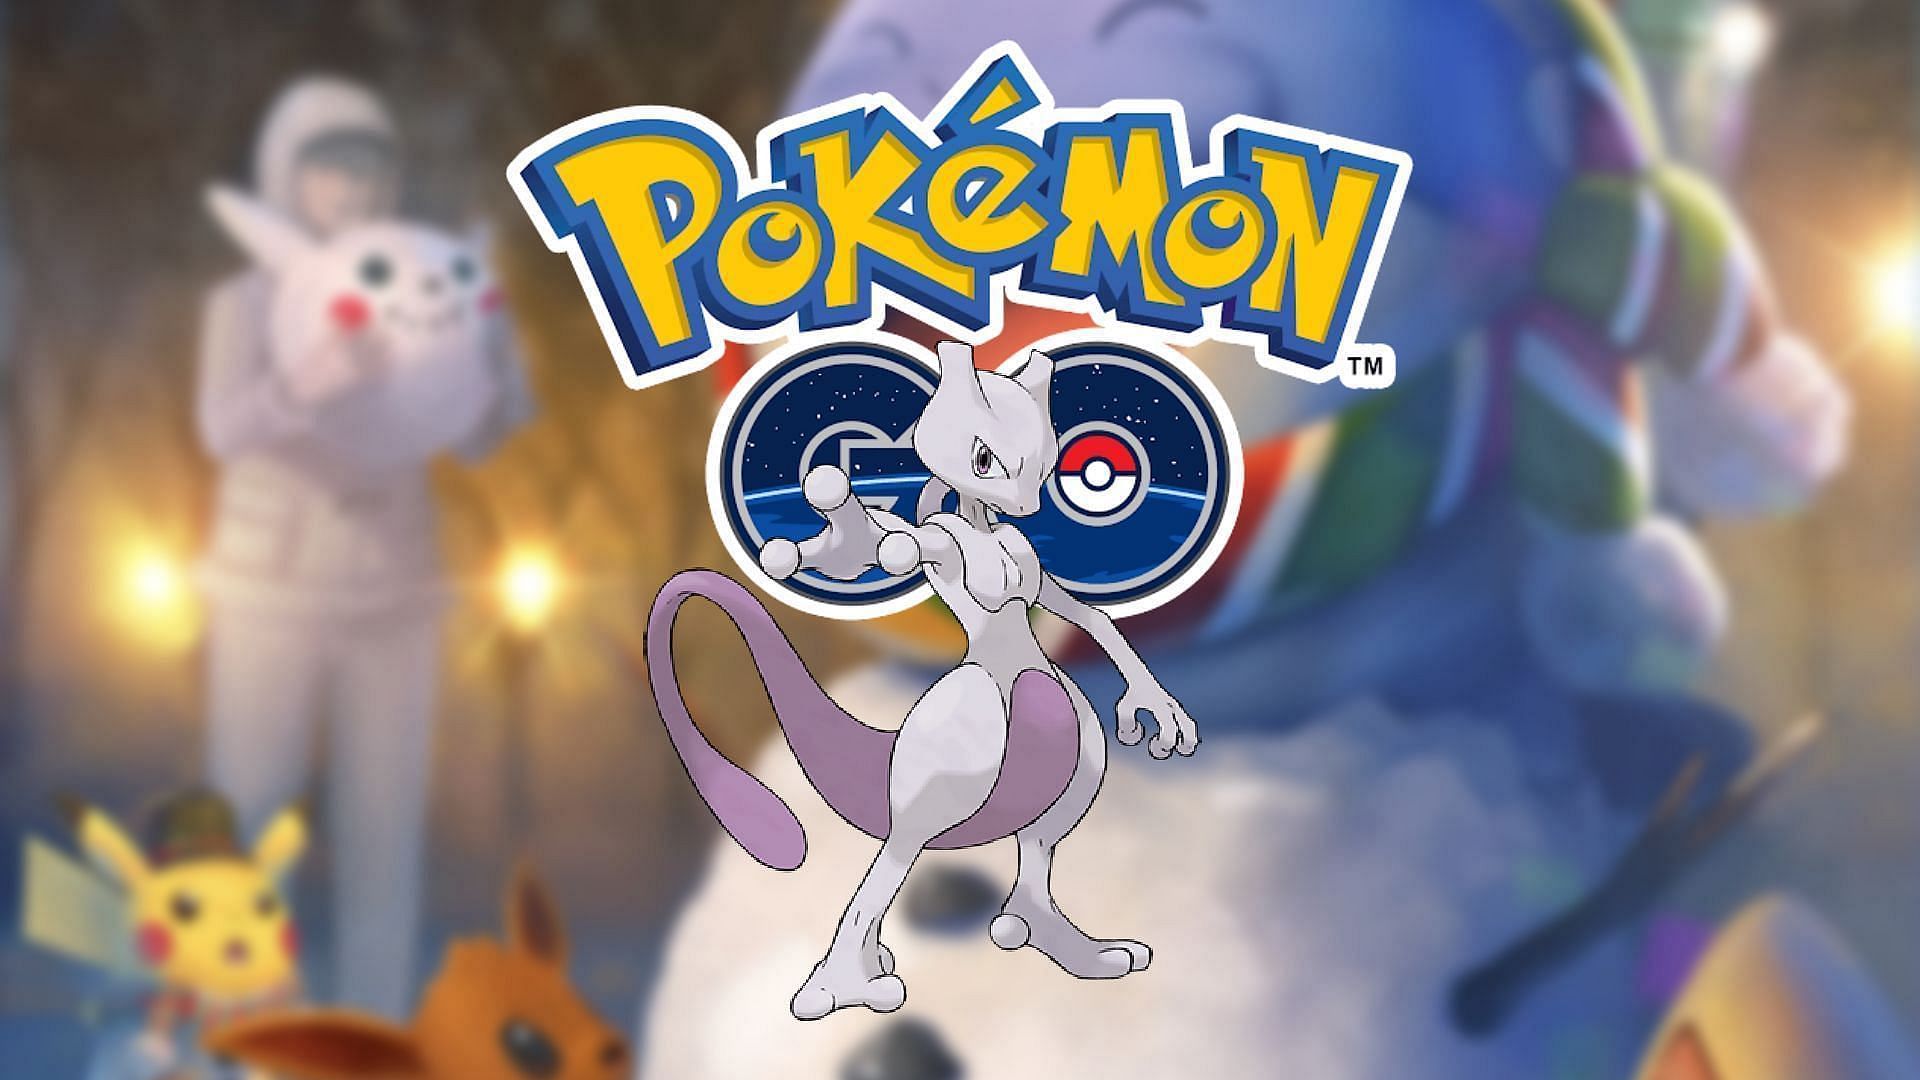 Best Pokémon to Evolve, TM, and Power-up to beat Raid Bosses in Pokémon Go